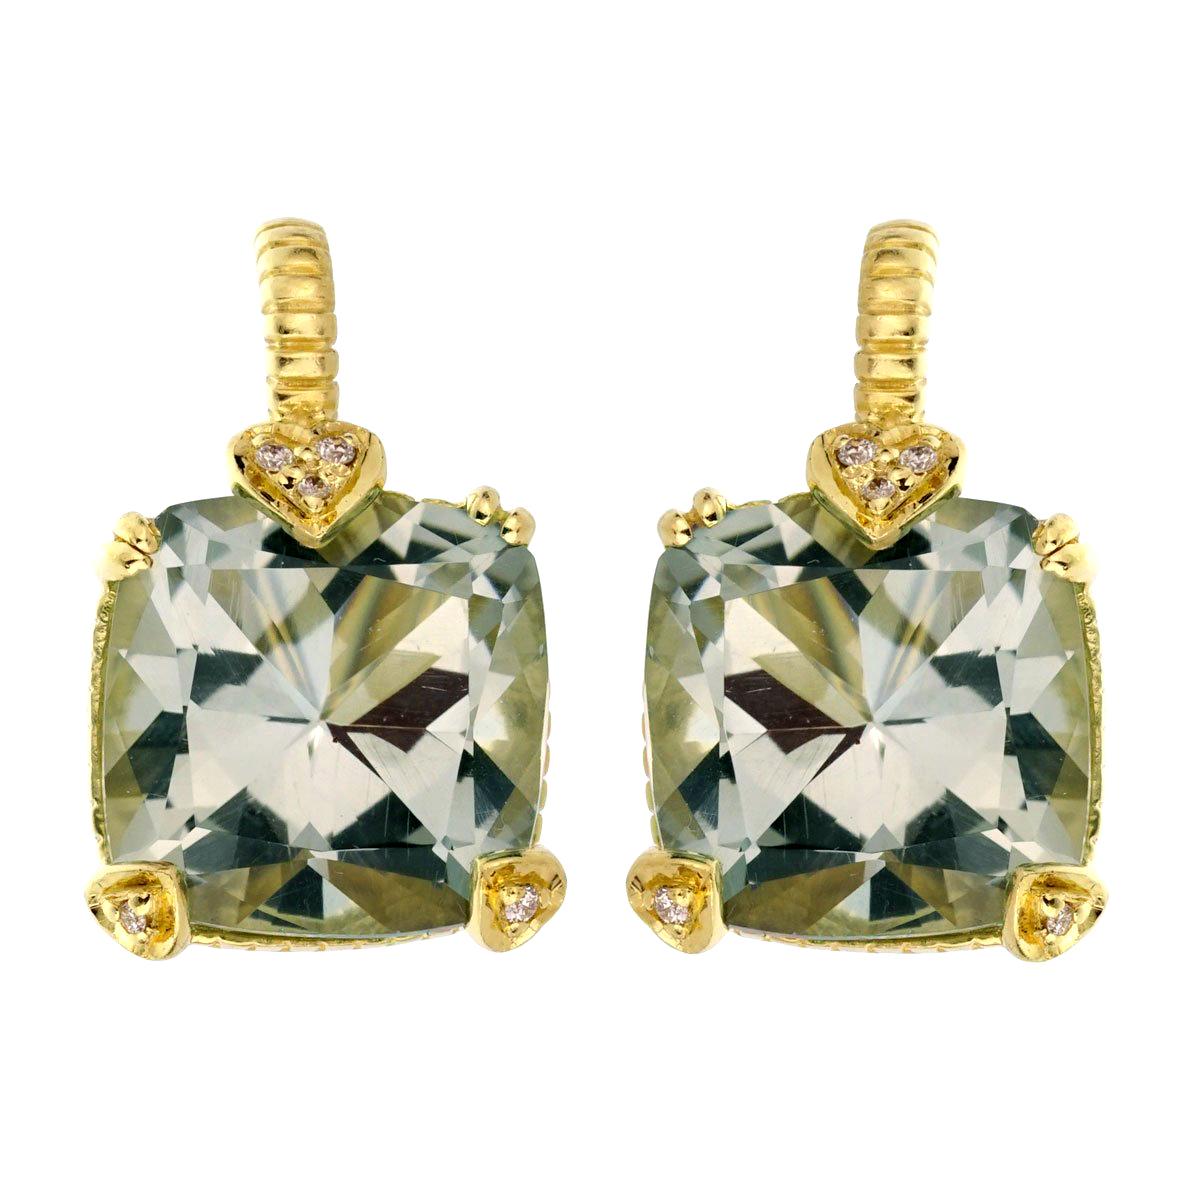 A chic set of Judith Ripka diamond drop earrings set in 18k yellow gold with light blue quartz.